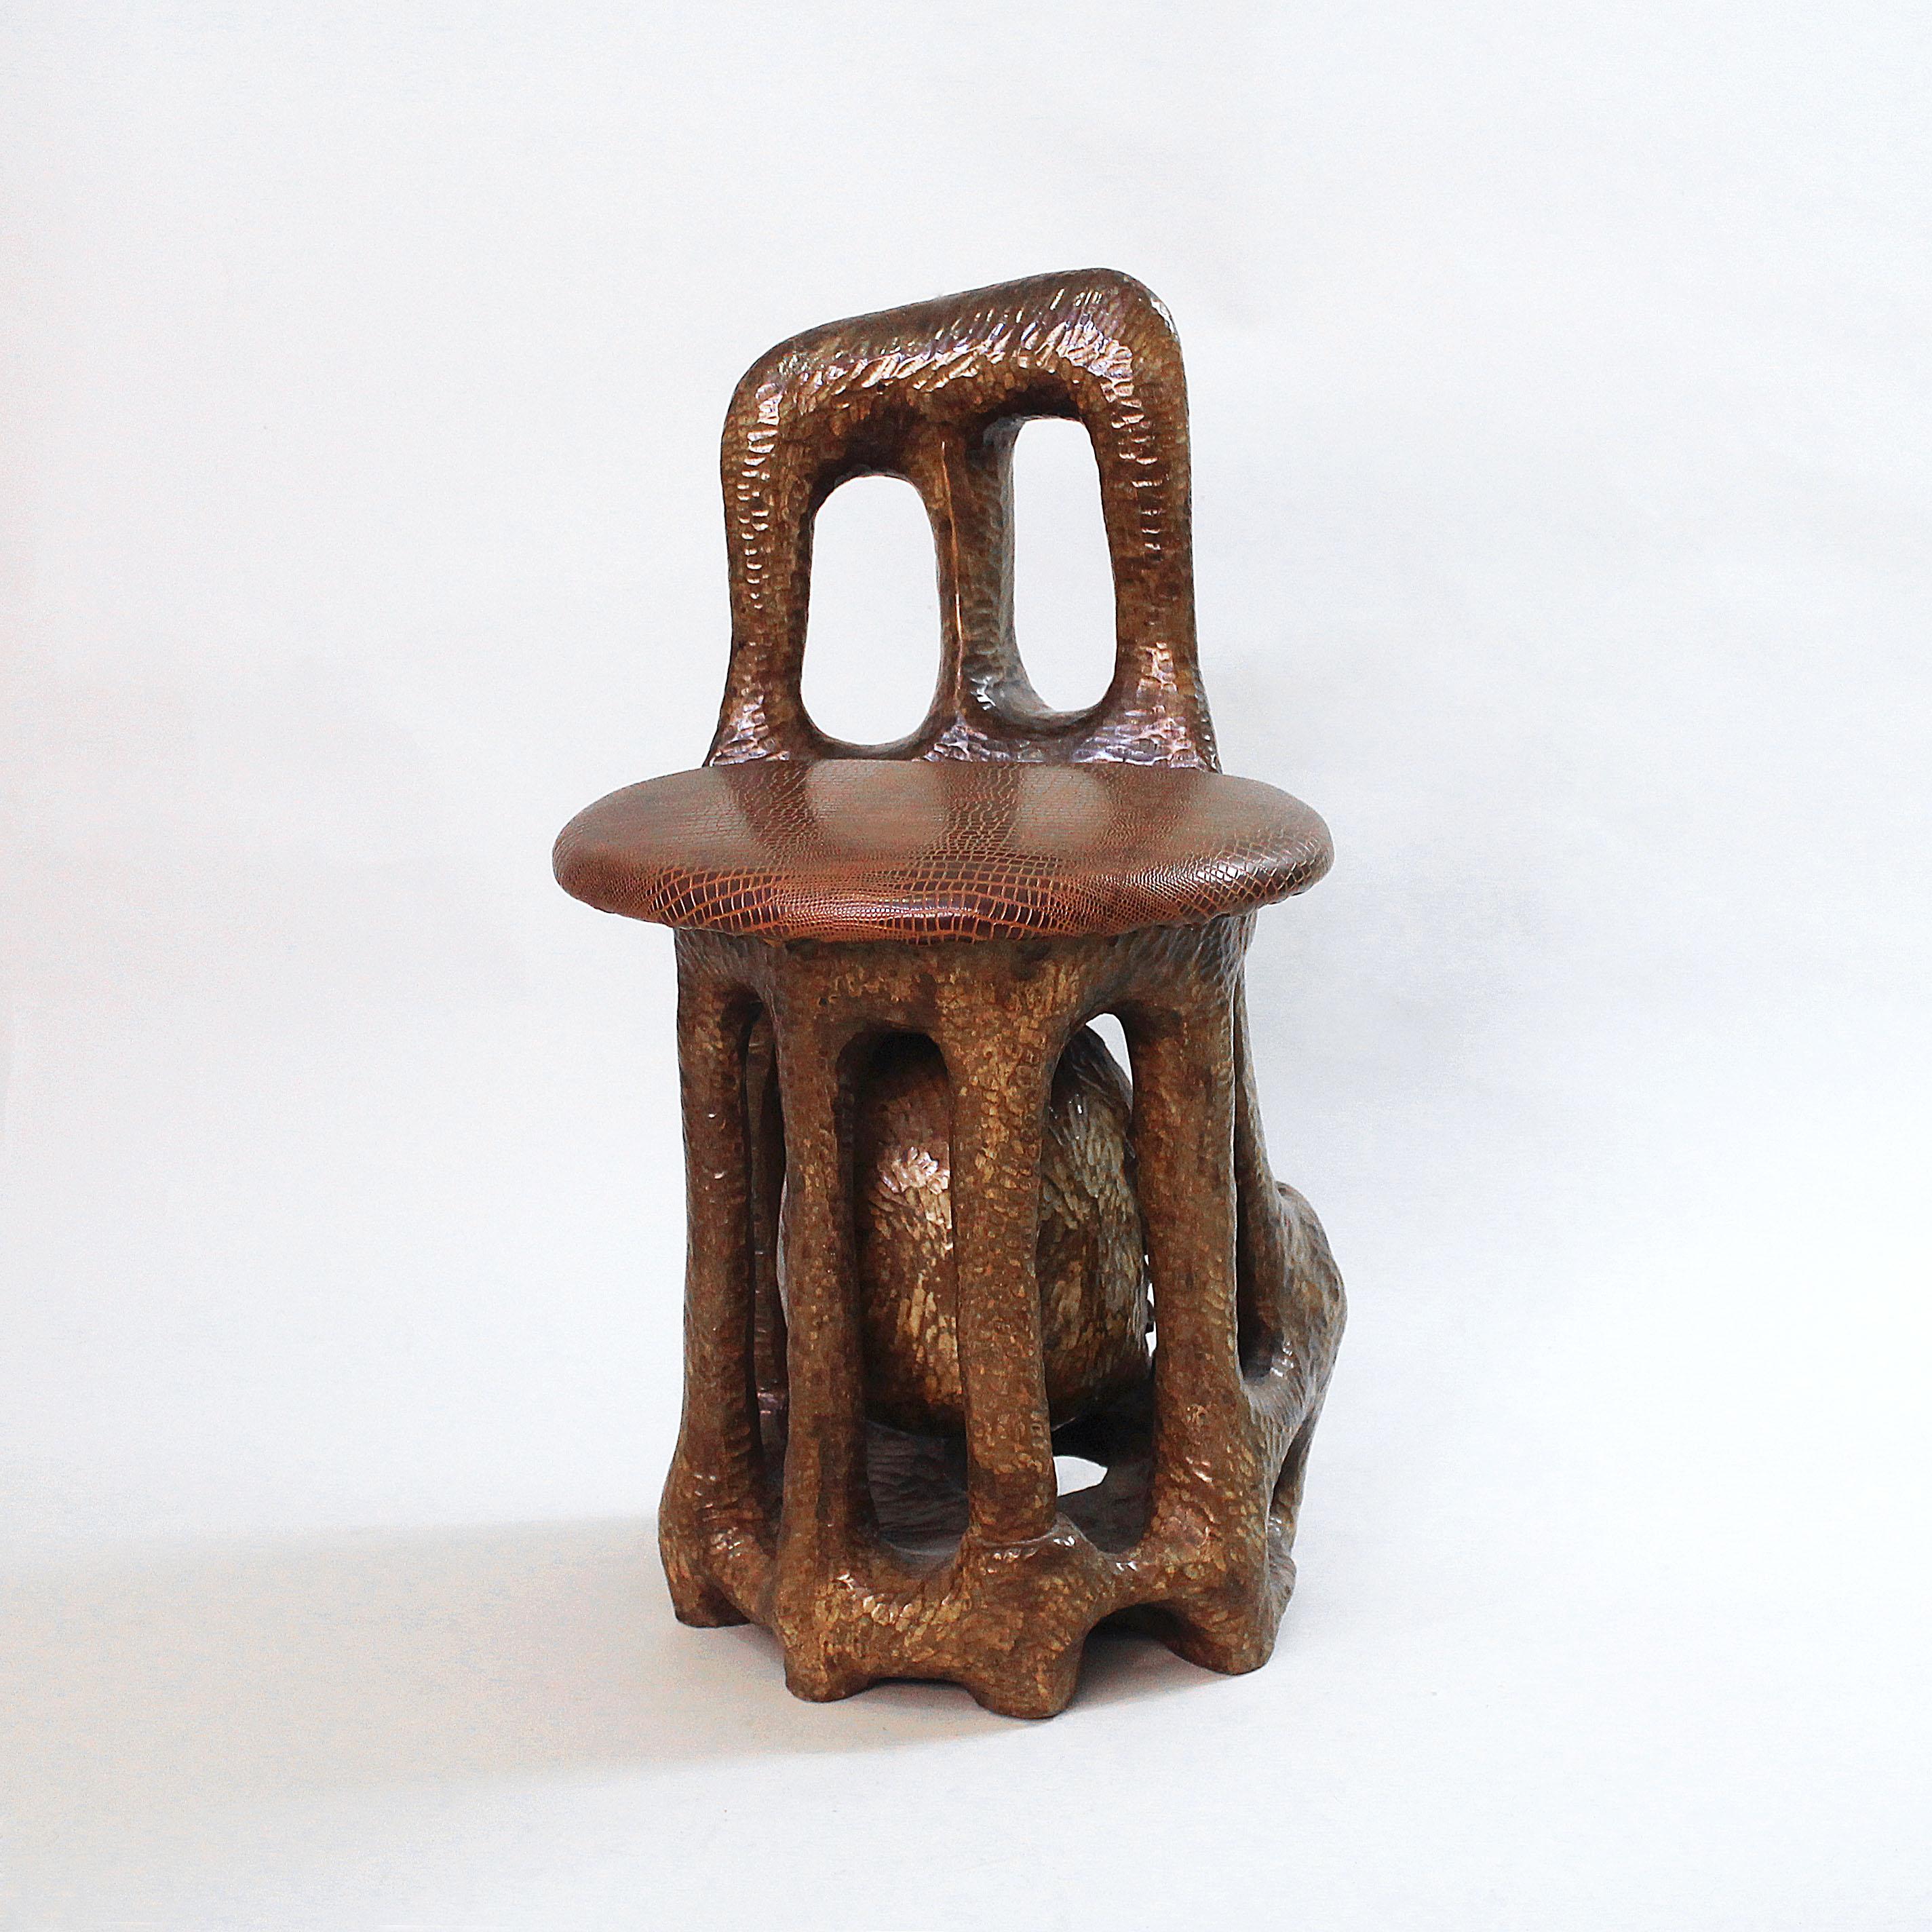 Primitive Unique Sol Garson Signed Hand Carved Wood Sculptural Chair For Sale